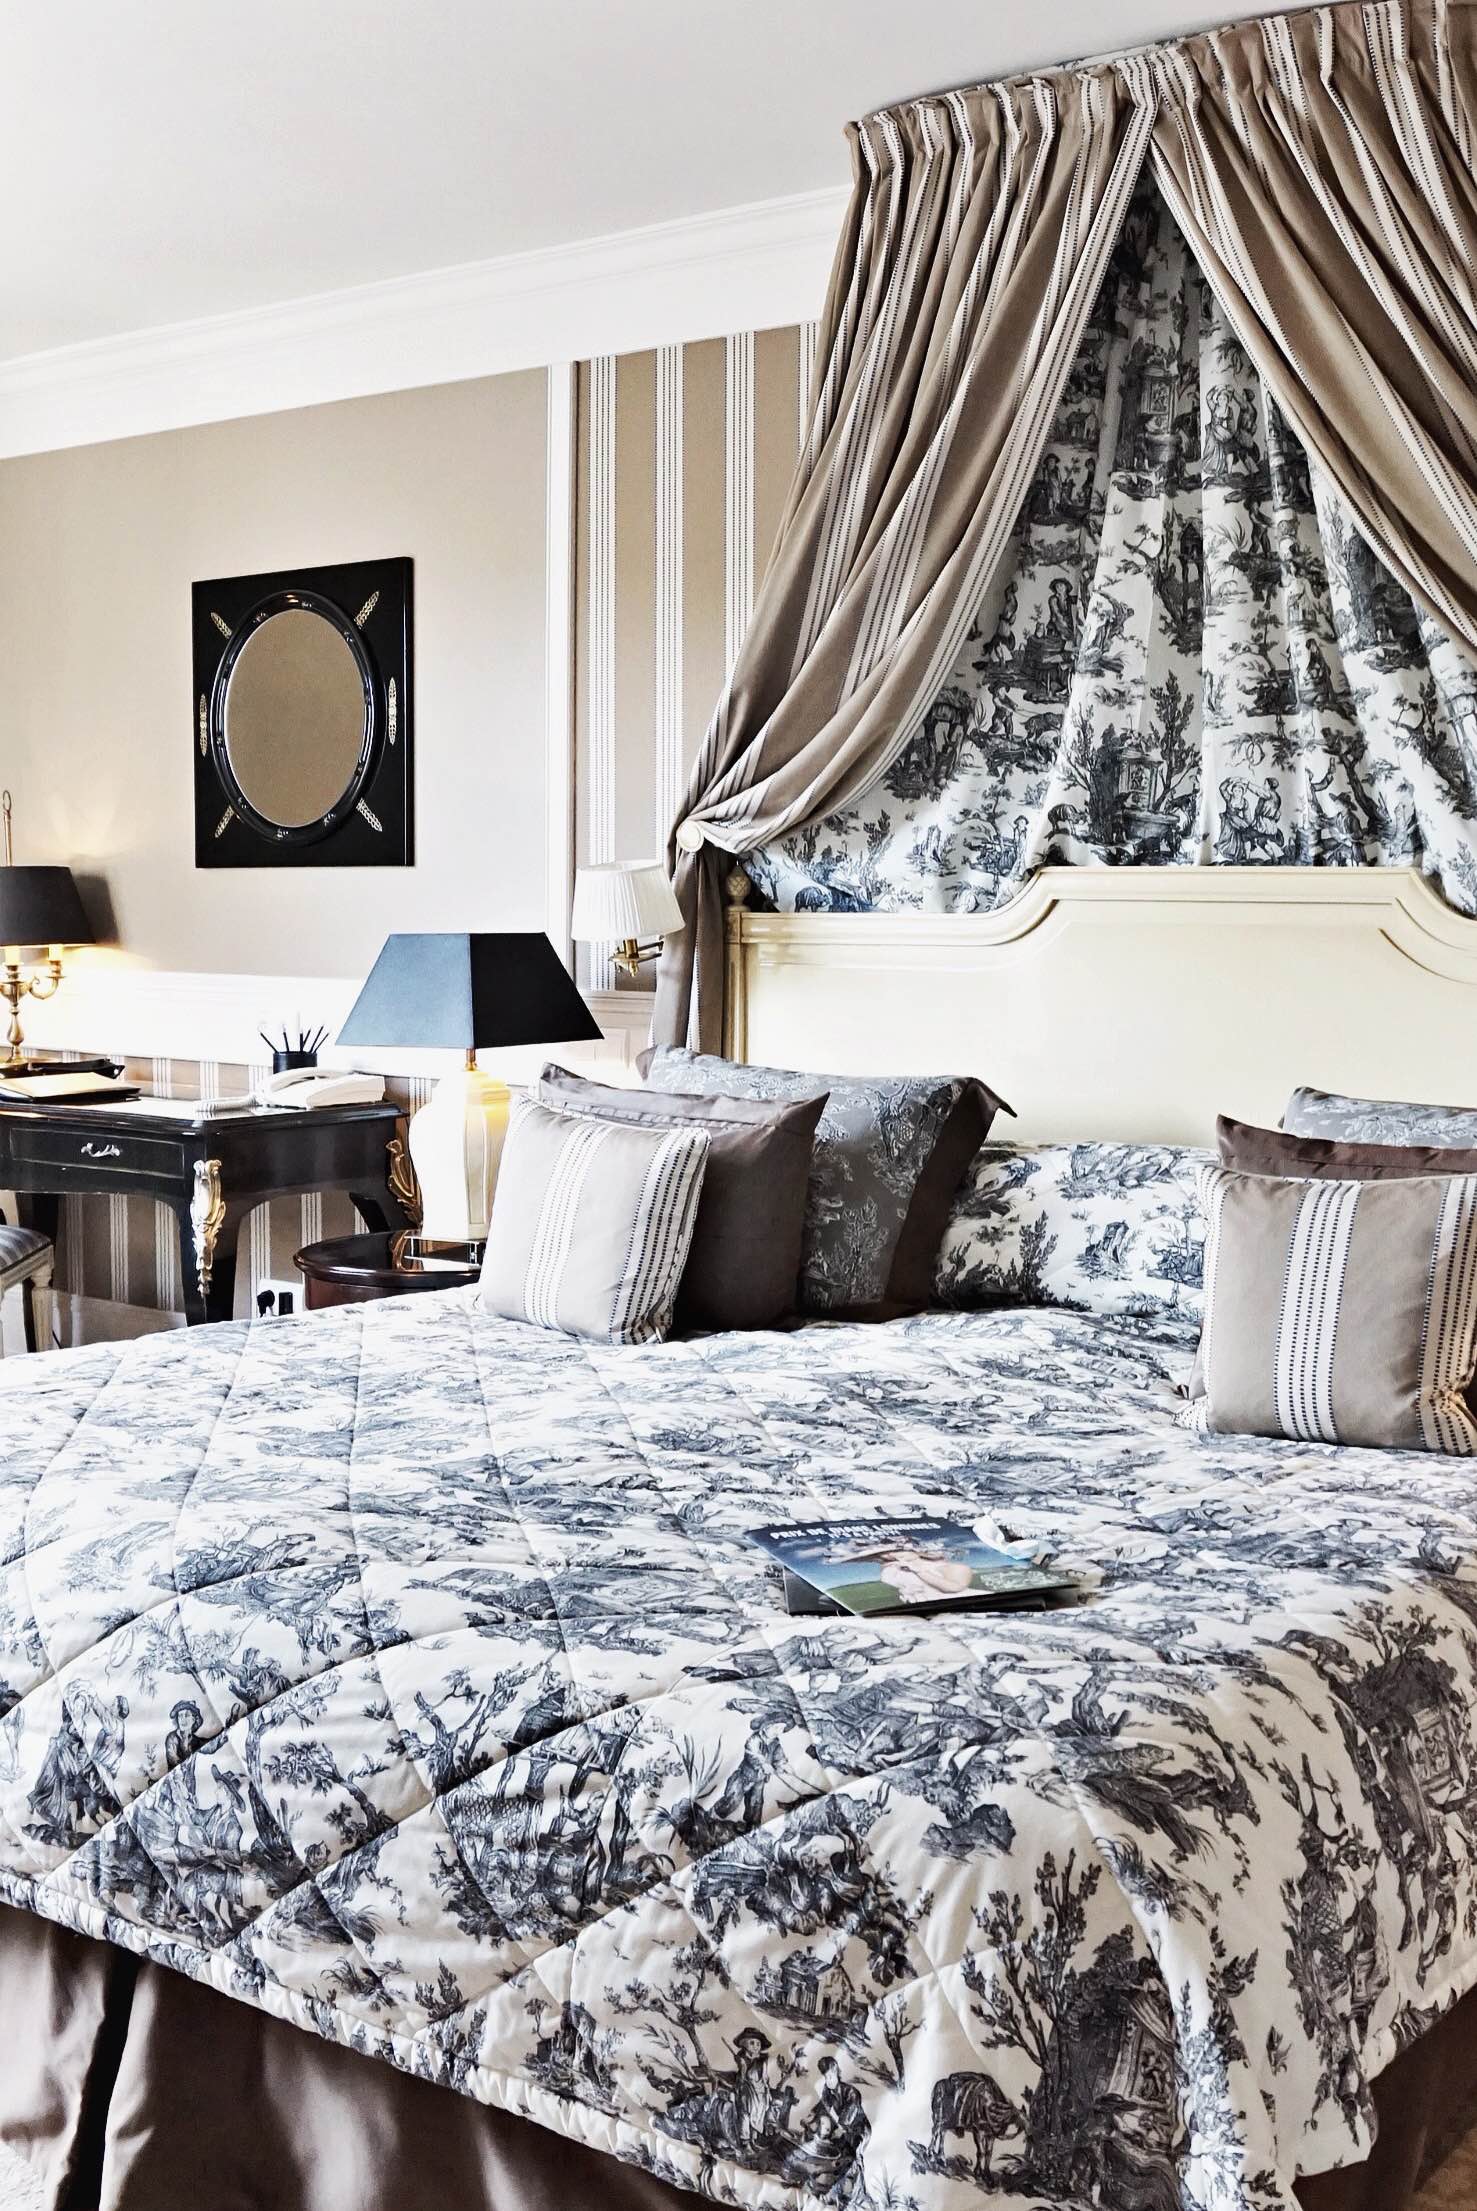 Tiara-Château-Hotel-Mont-Royal-Room-Chantilly-France-Paris-Disi-Couture-01